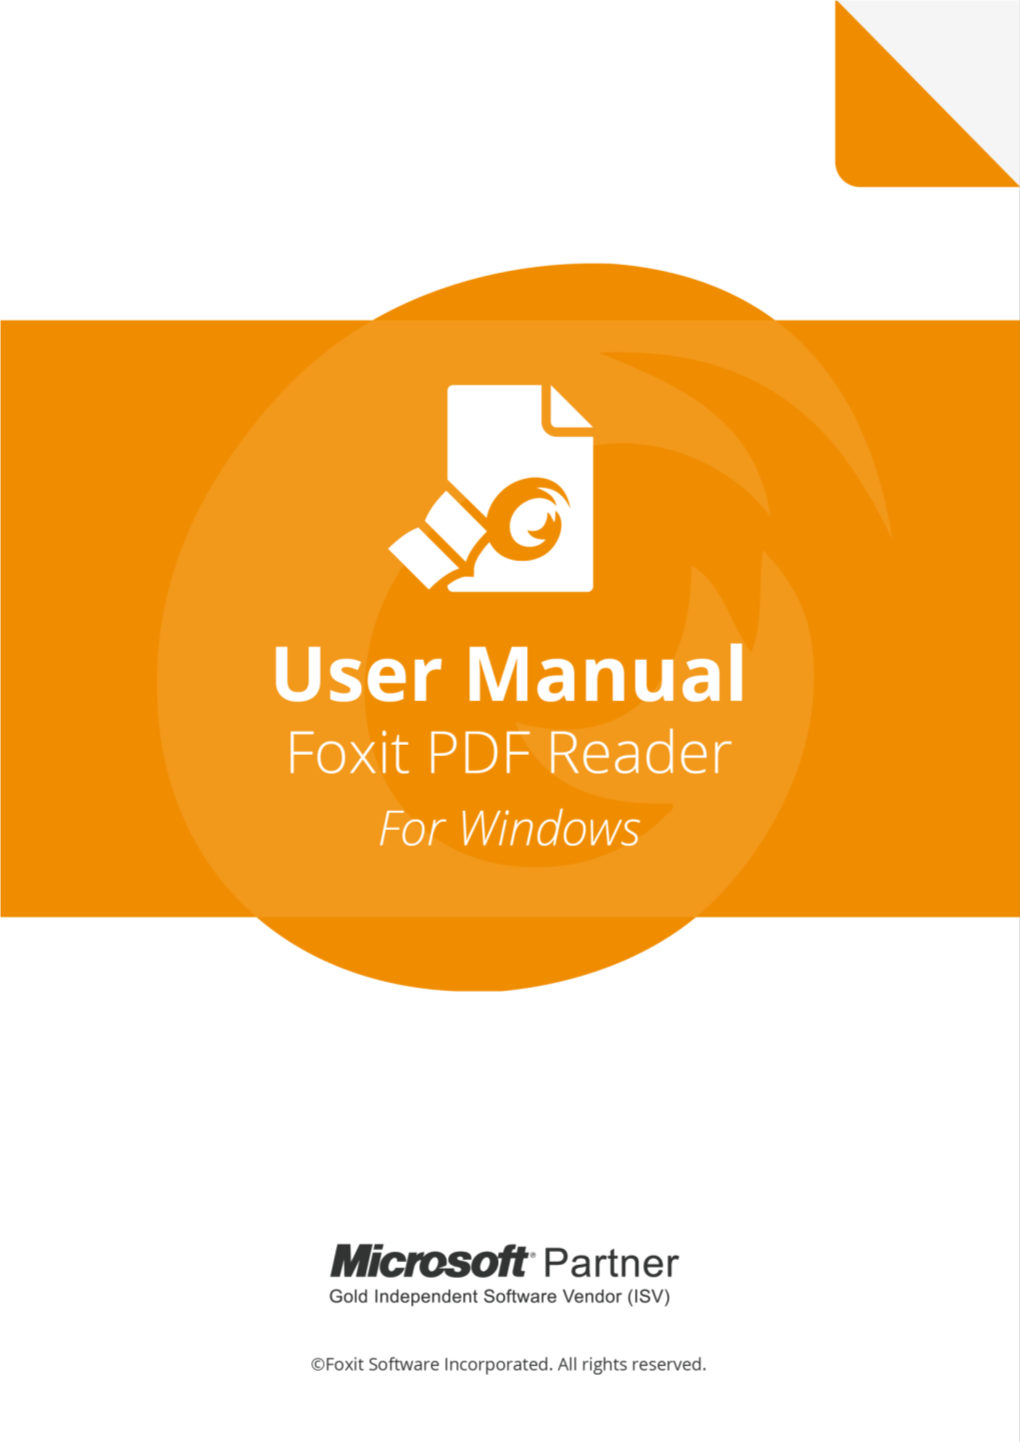 Foxit PDF Reader 11.0 User Manual